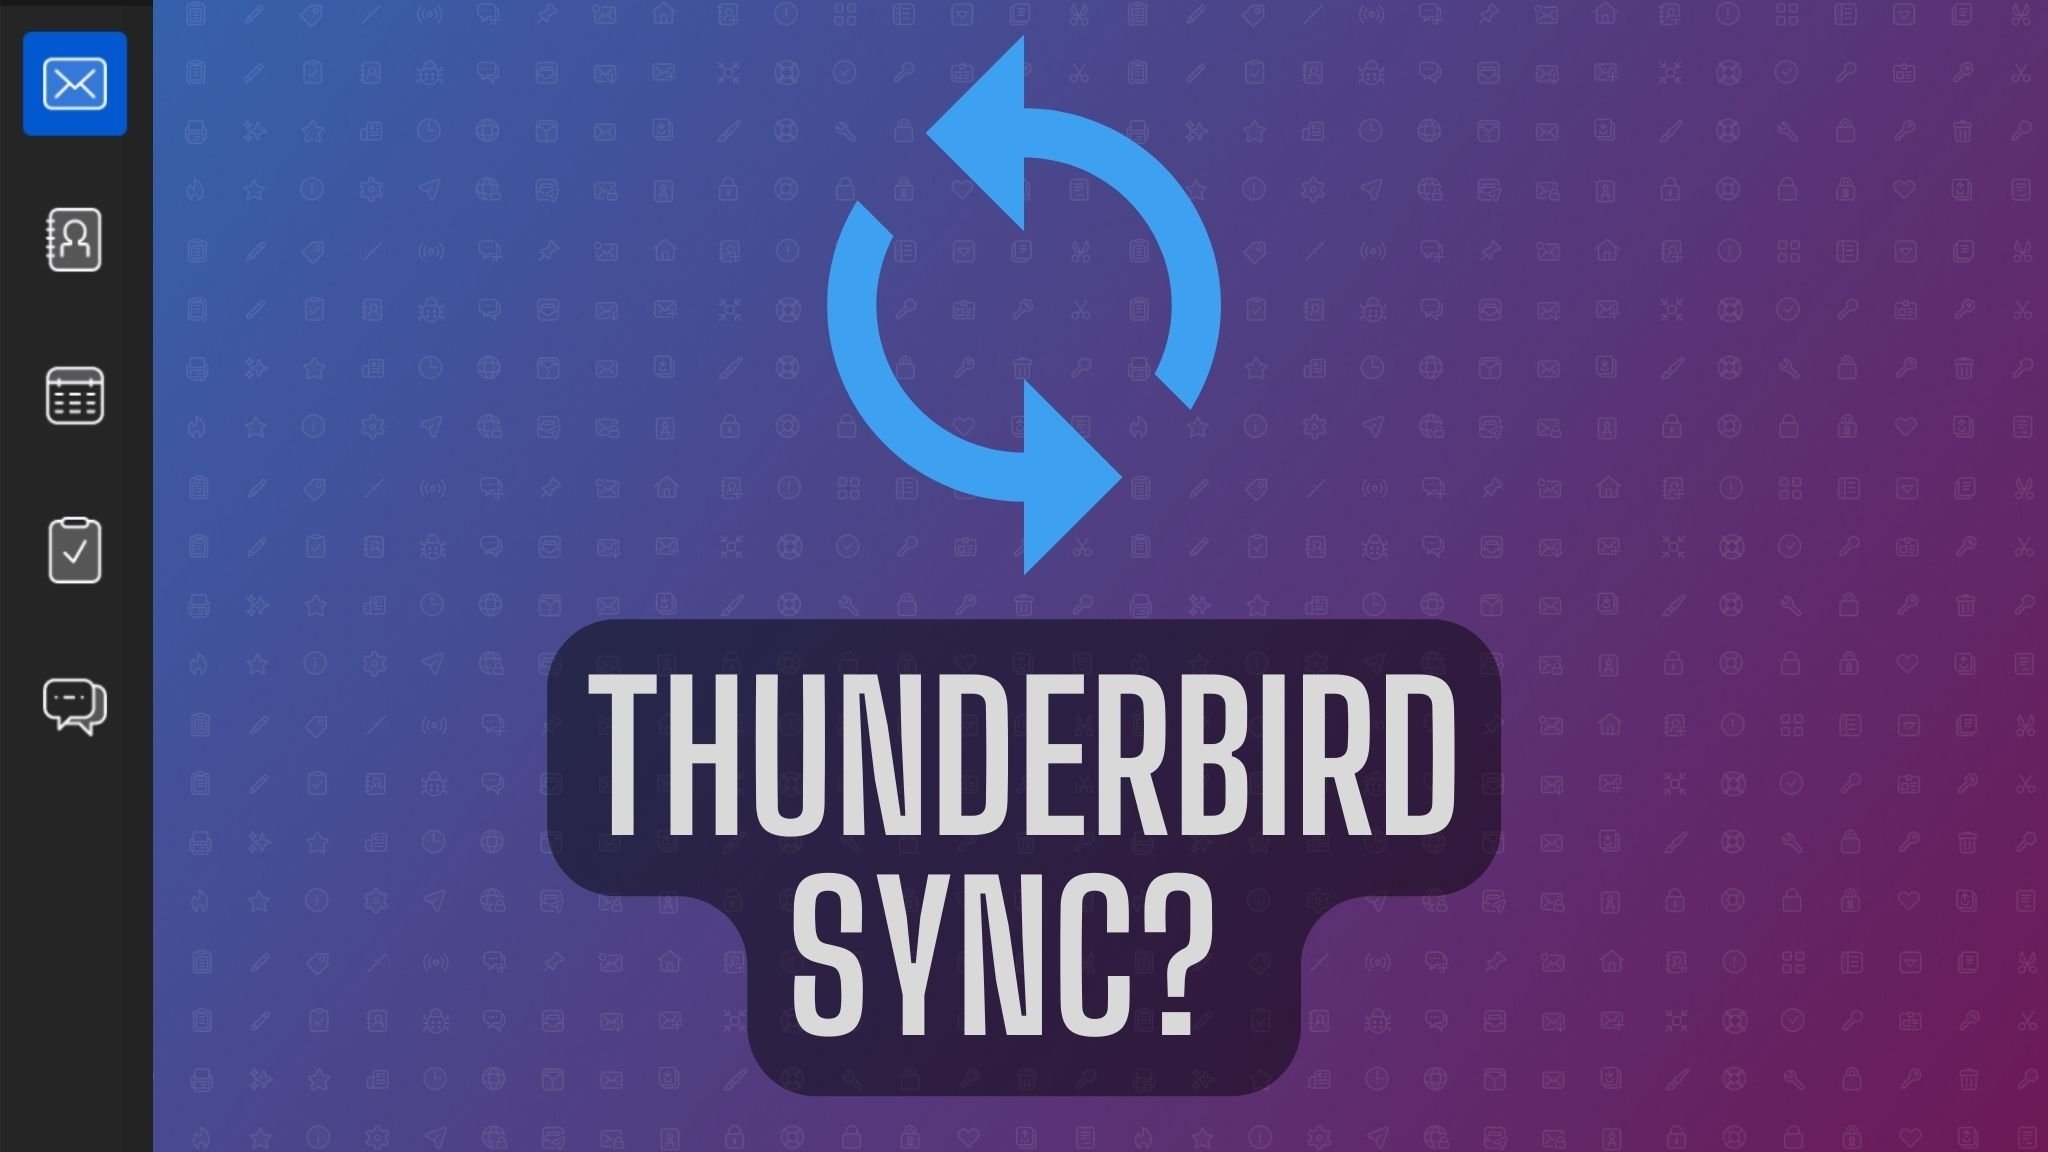 Thunderbird Sync